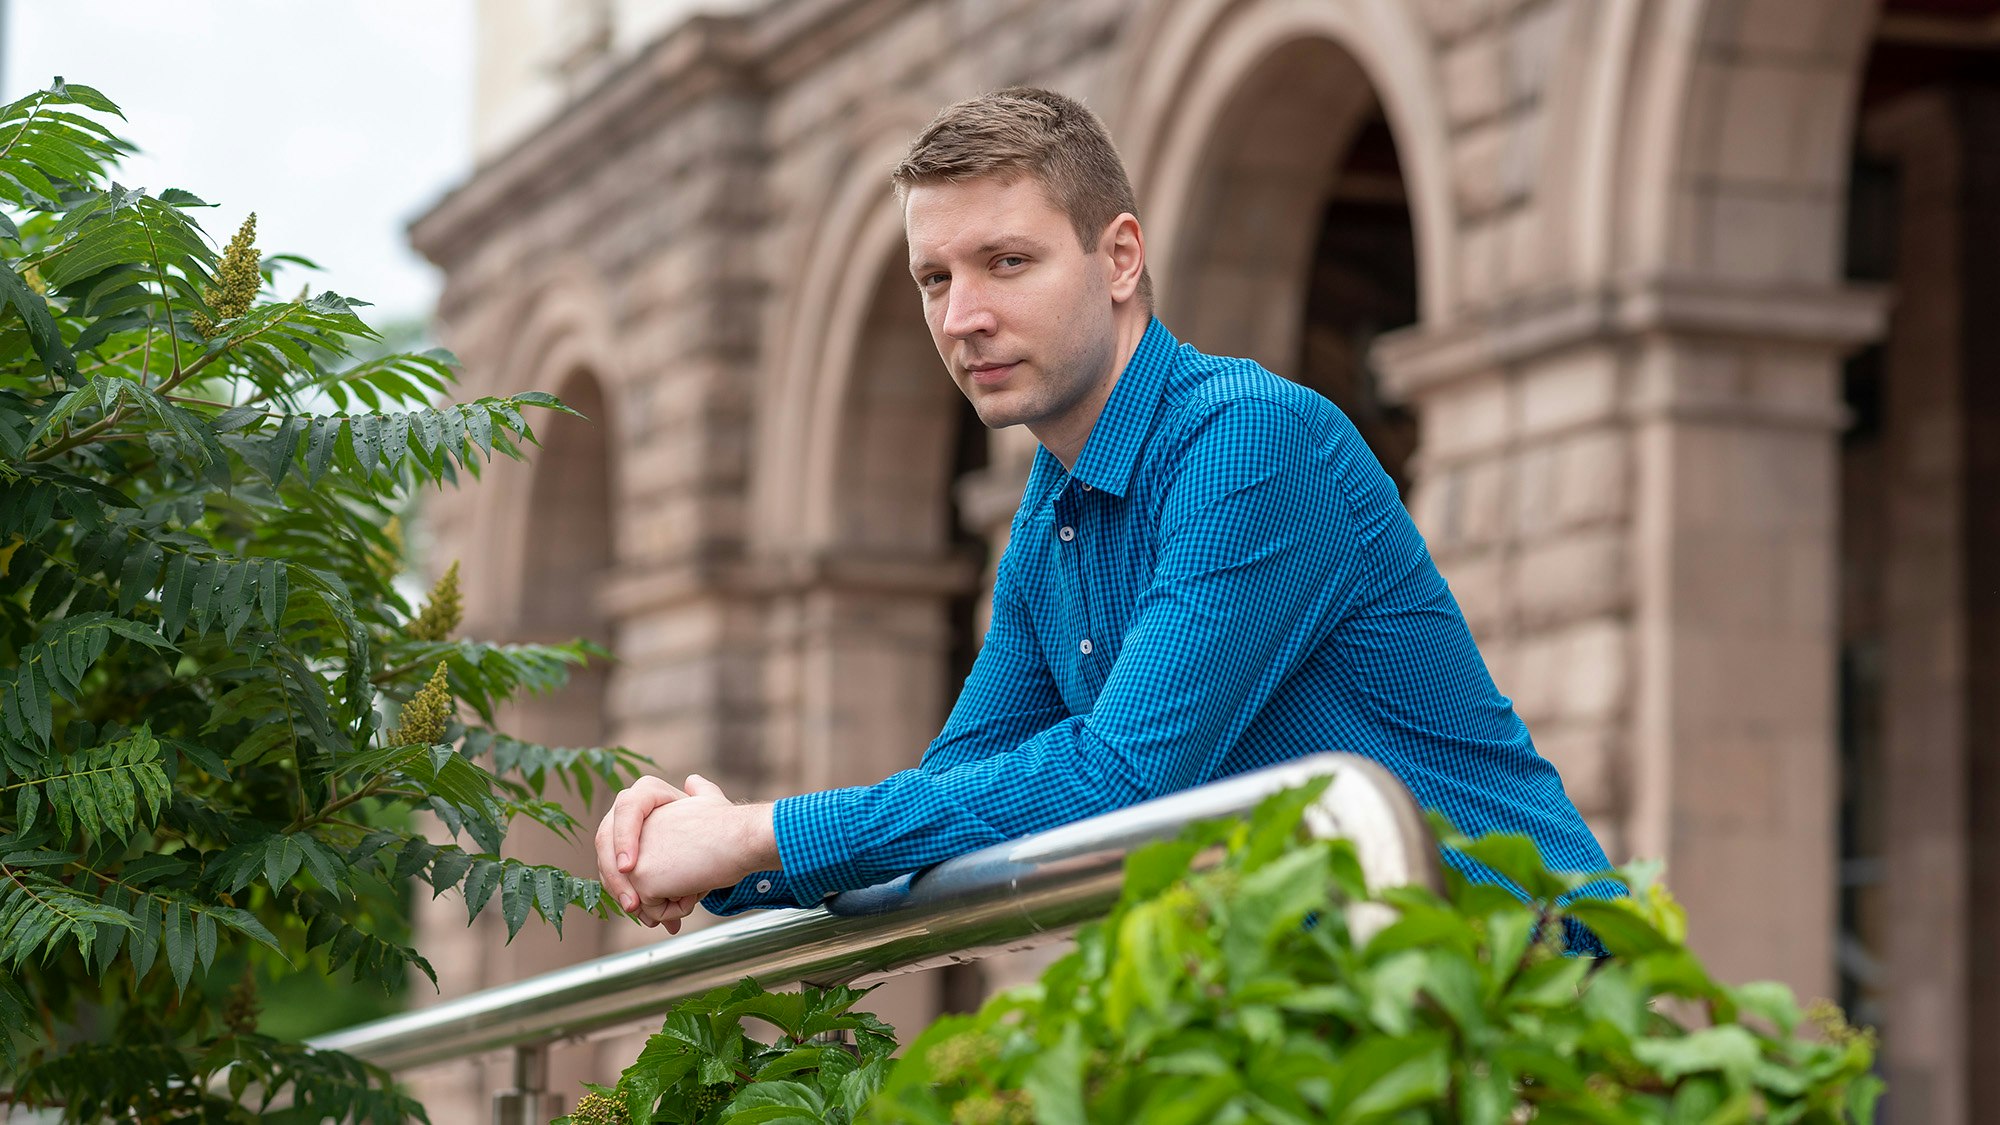 Vasilev leaning on railing